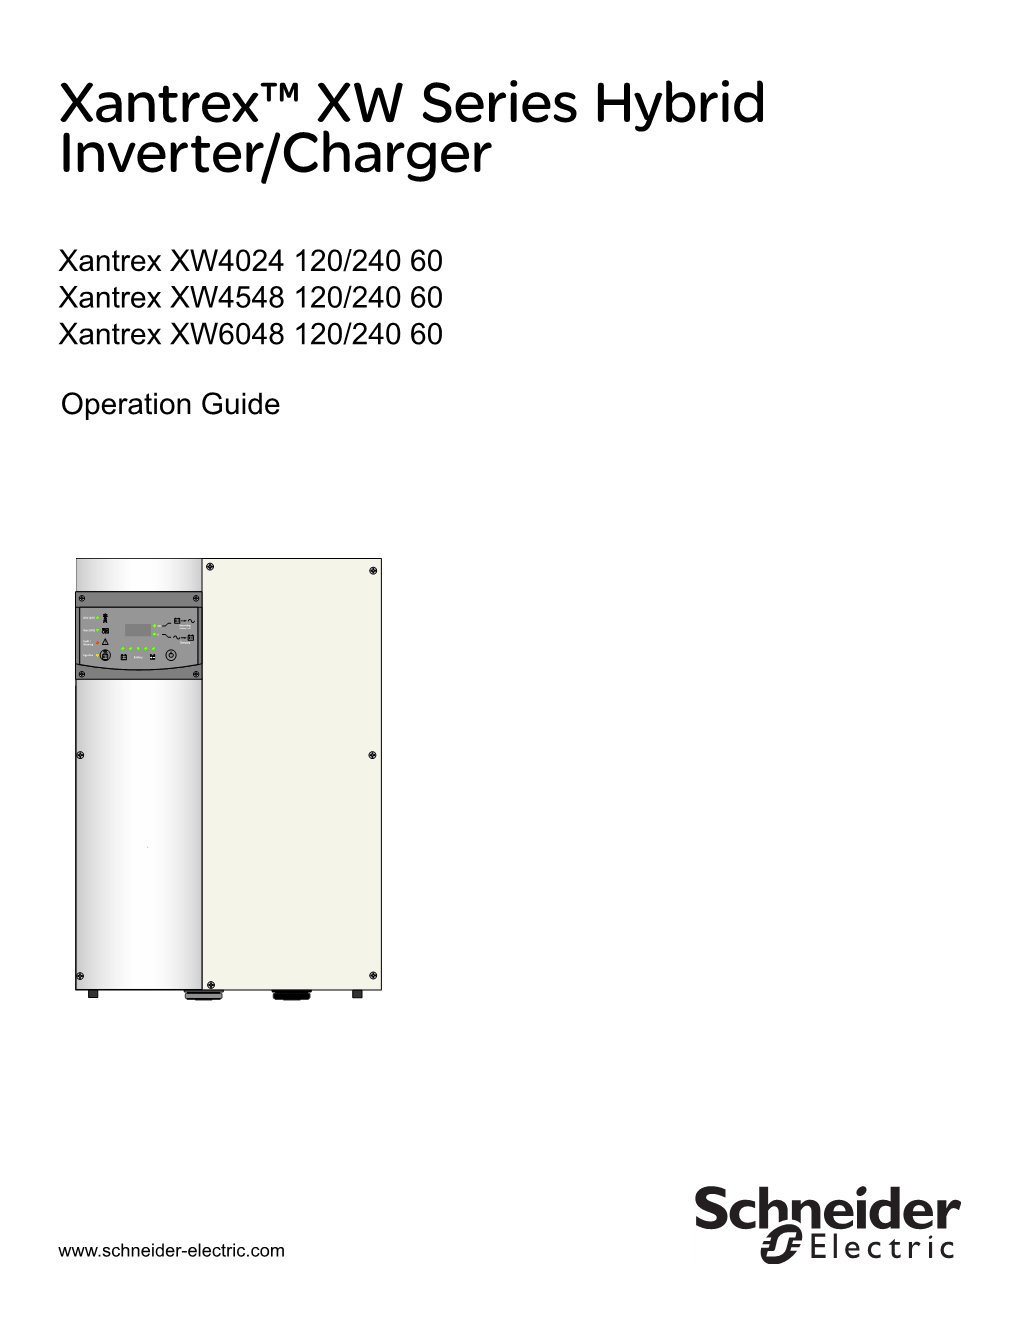 Xantrex™ XW Series Hybrid Inverter/Charger